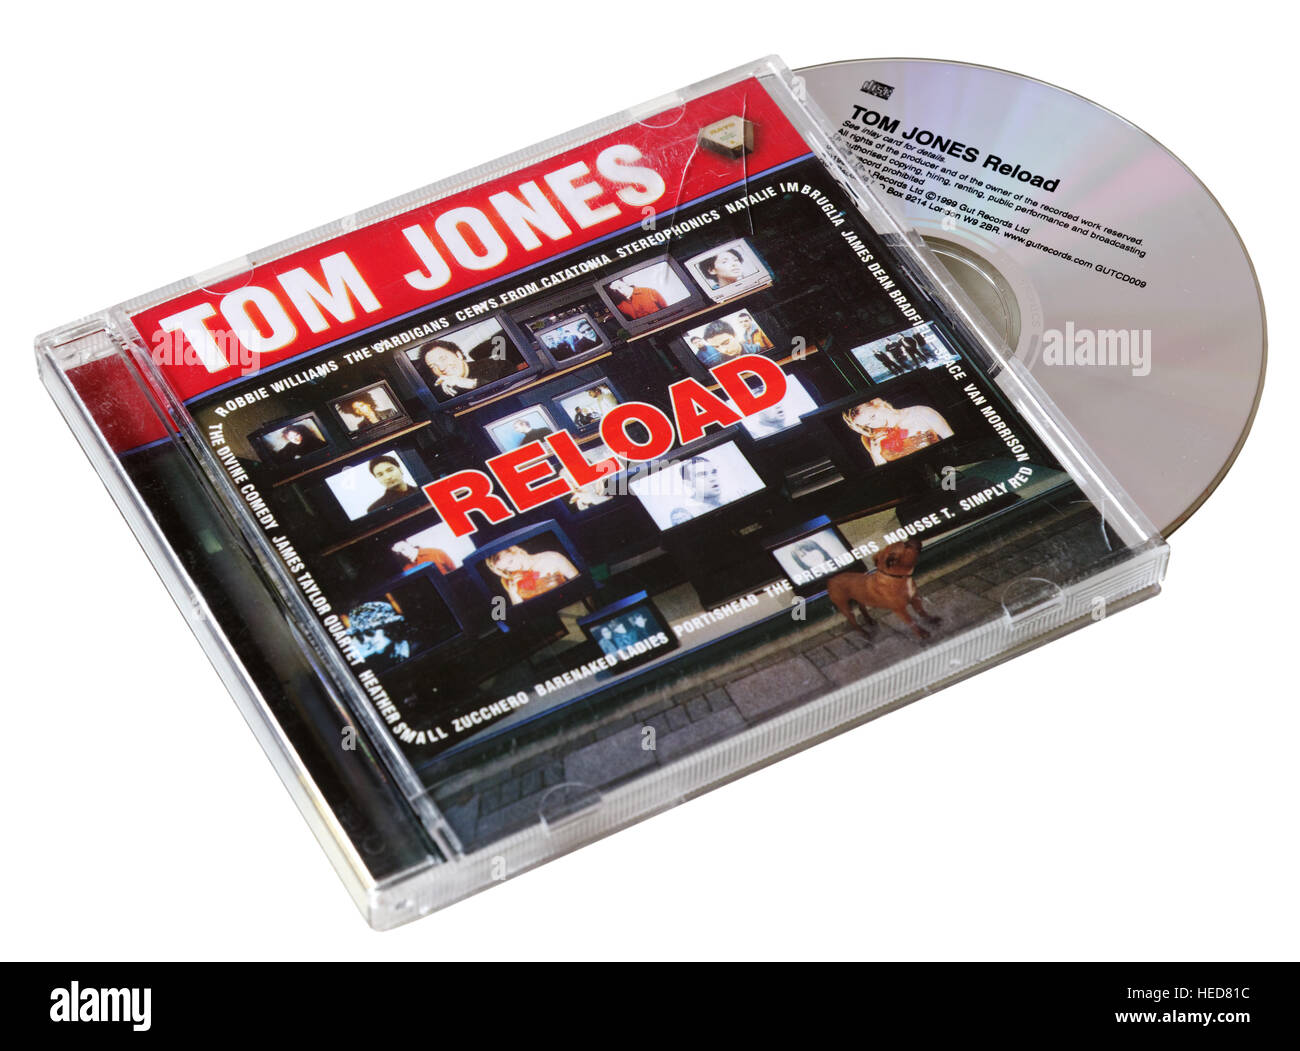 Tom Jones ReLoad CD Stock Photo